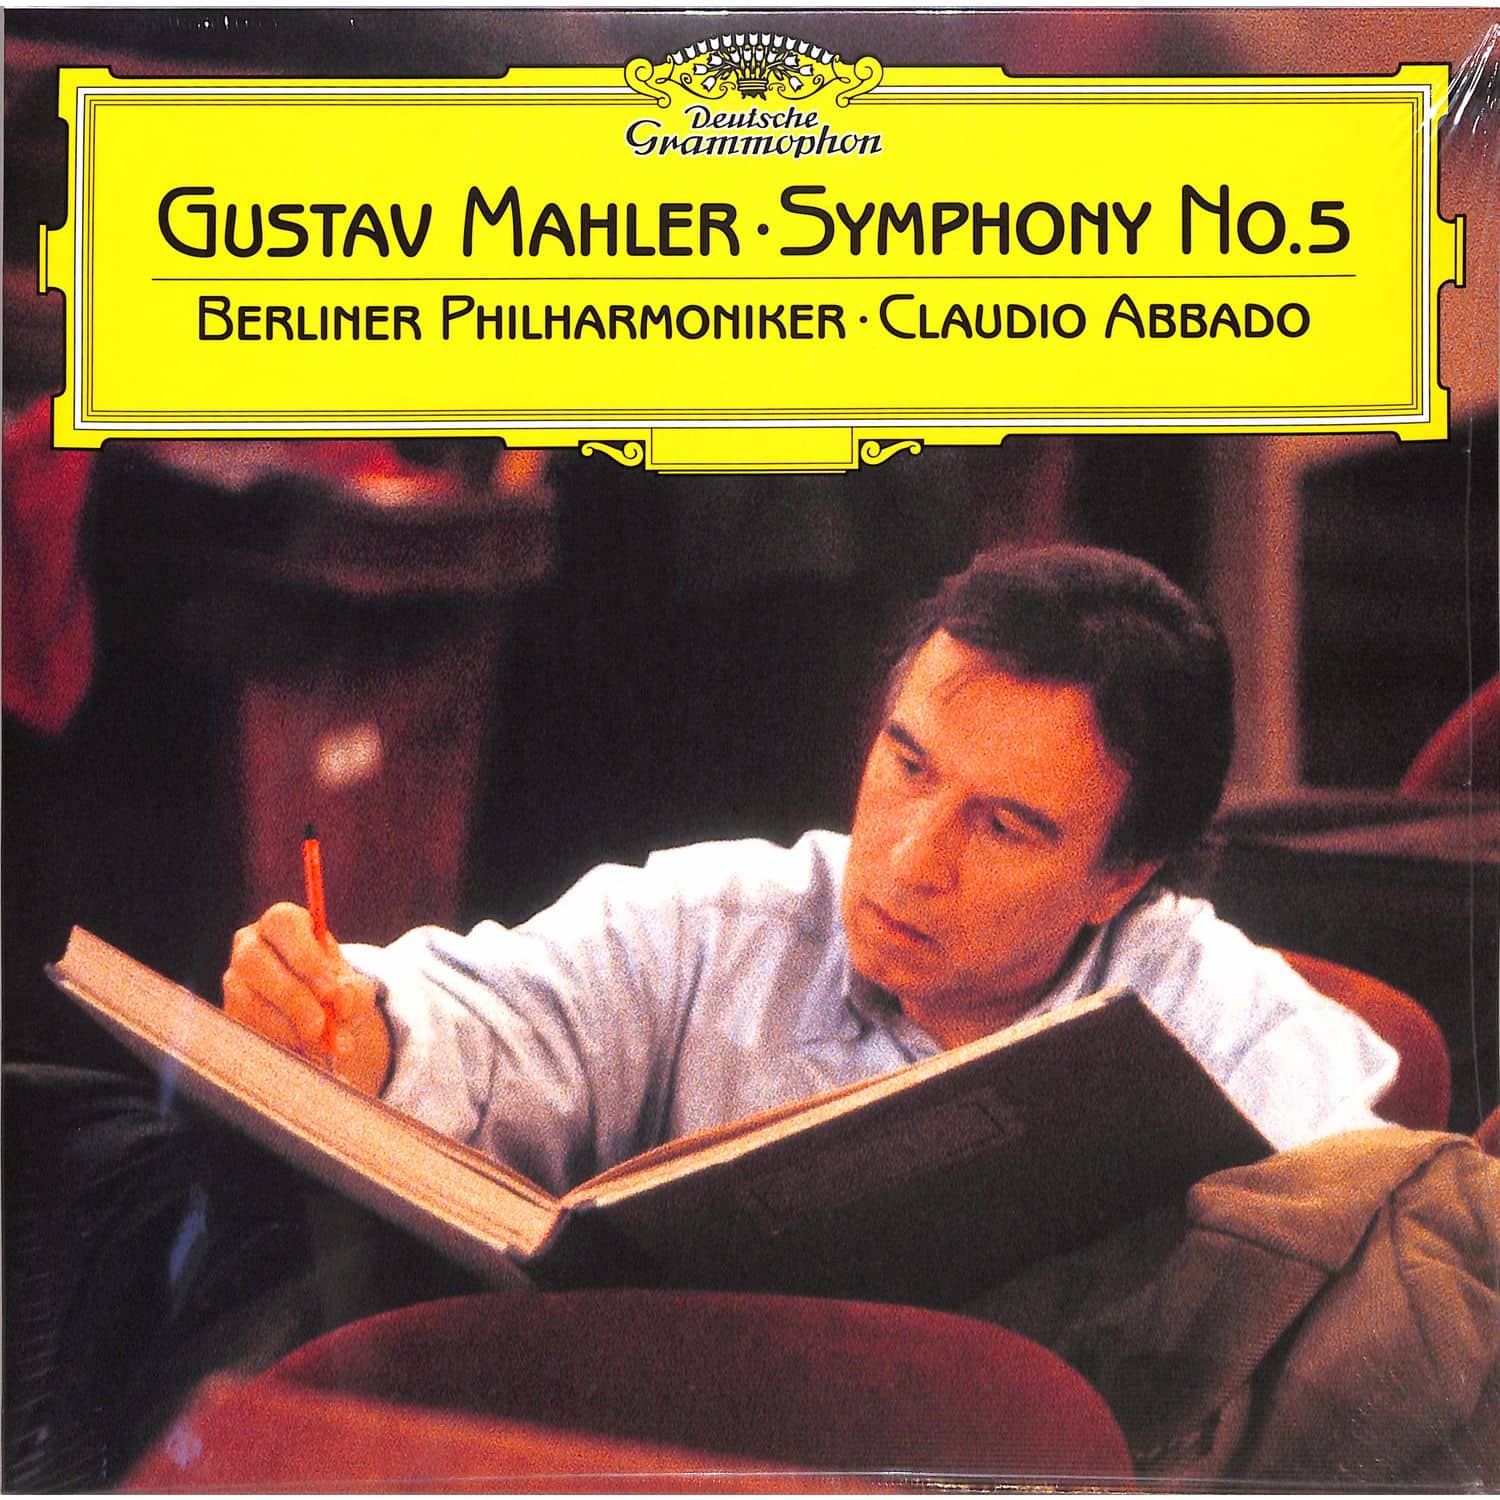 Claudio Abbado / Berliner Philharmoniker - GUSTAV MAHLER: SINFONIE 5 